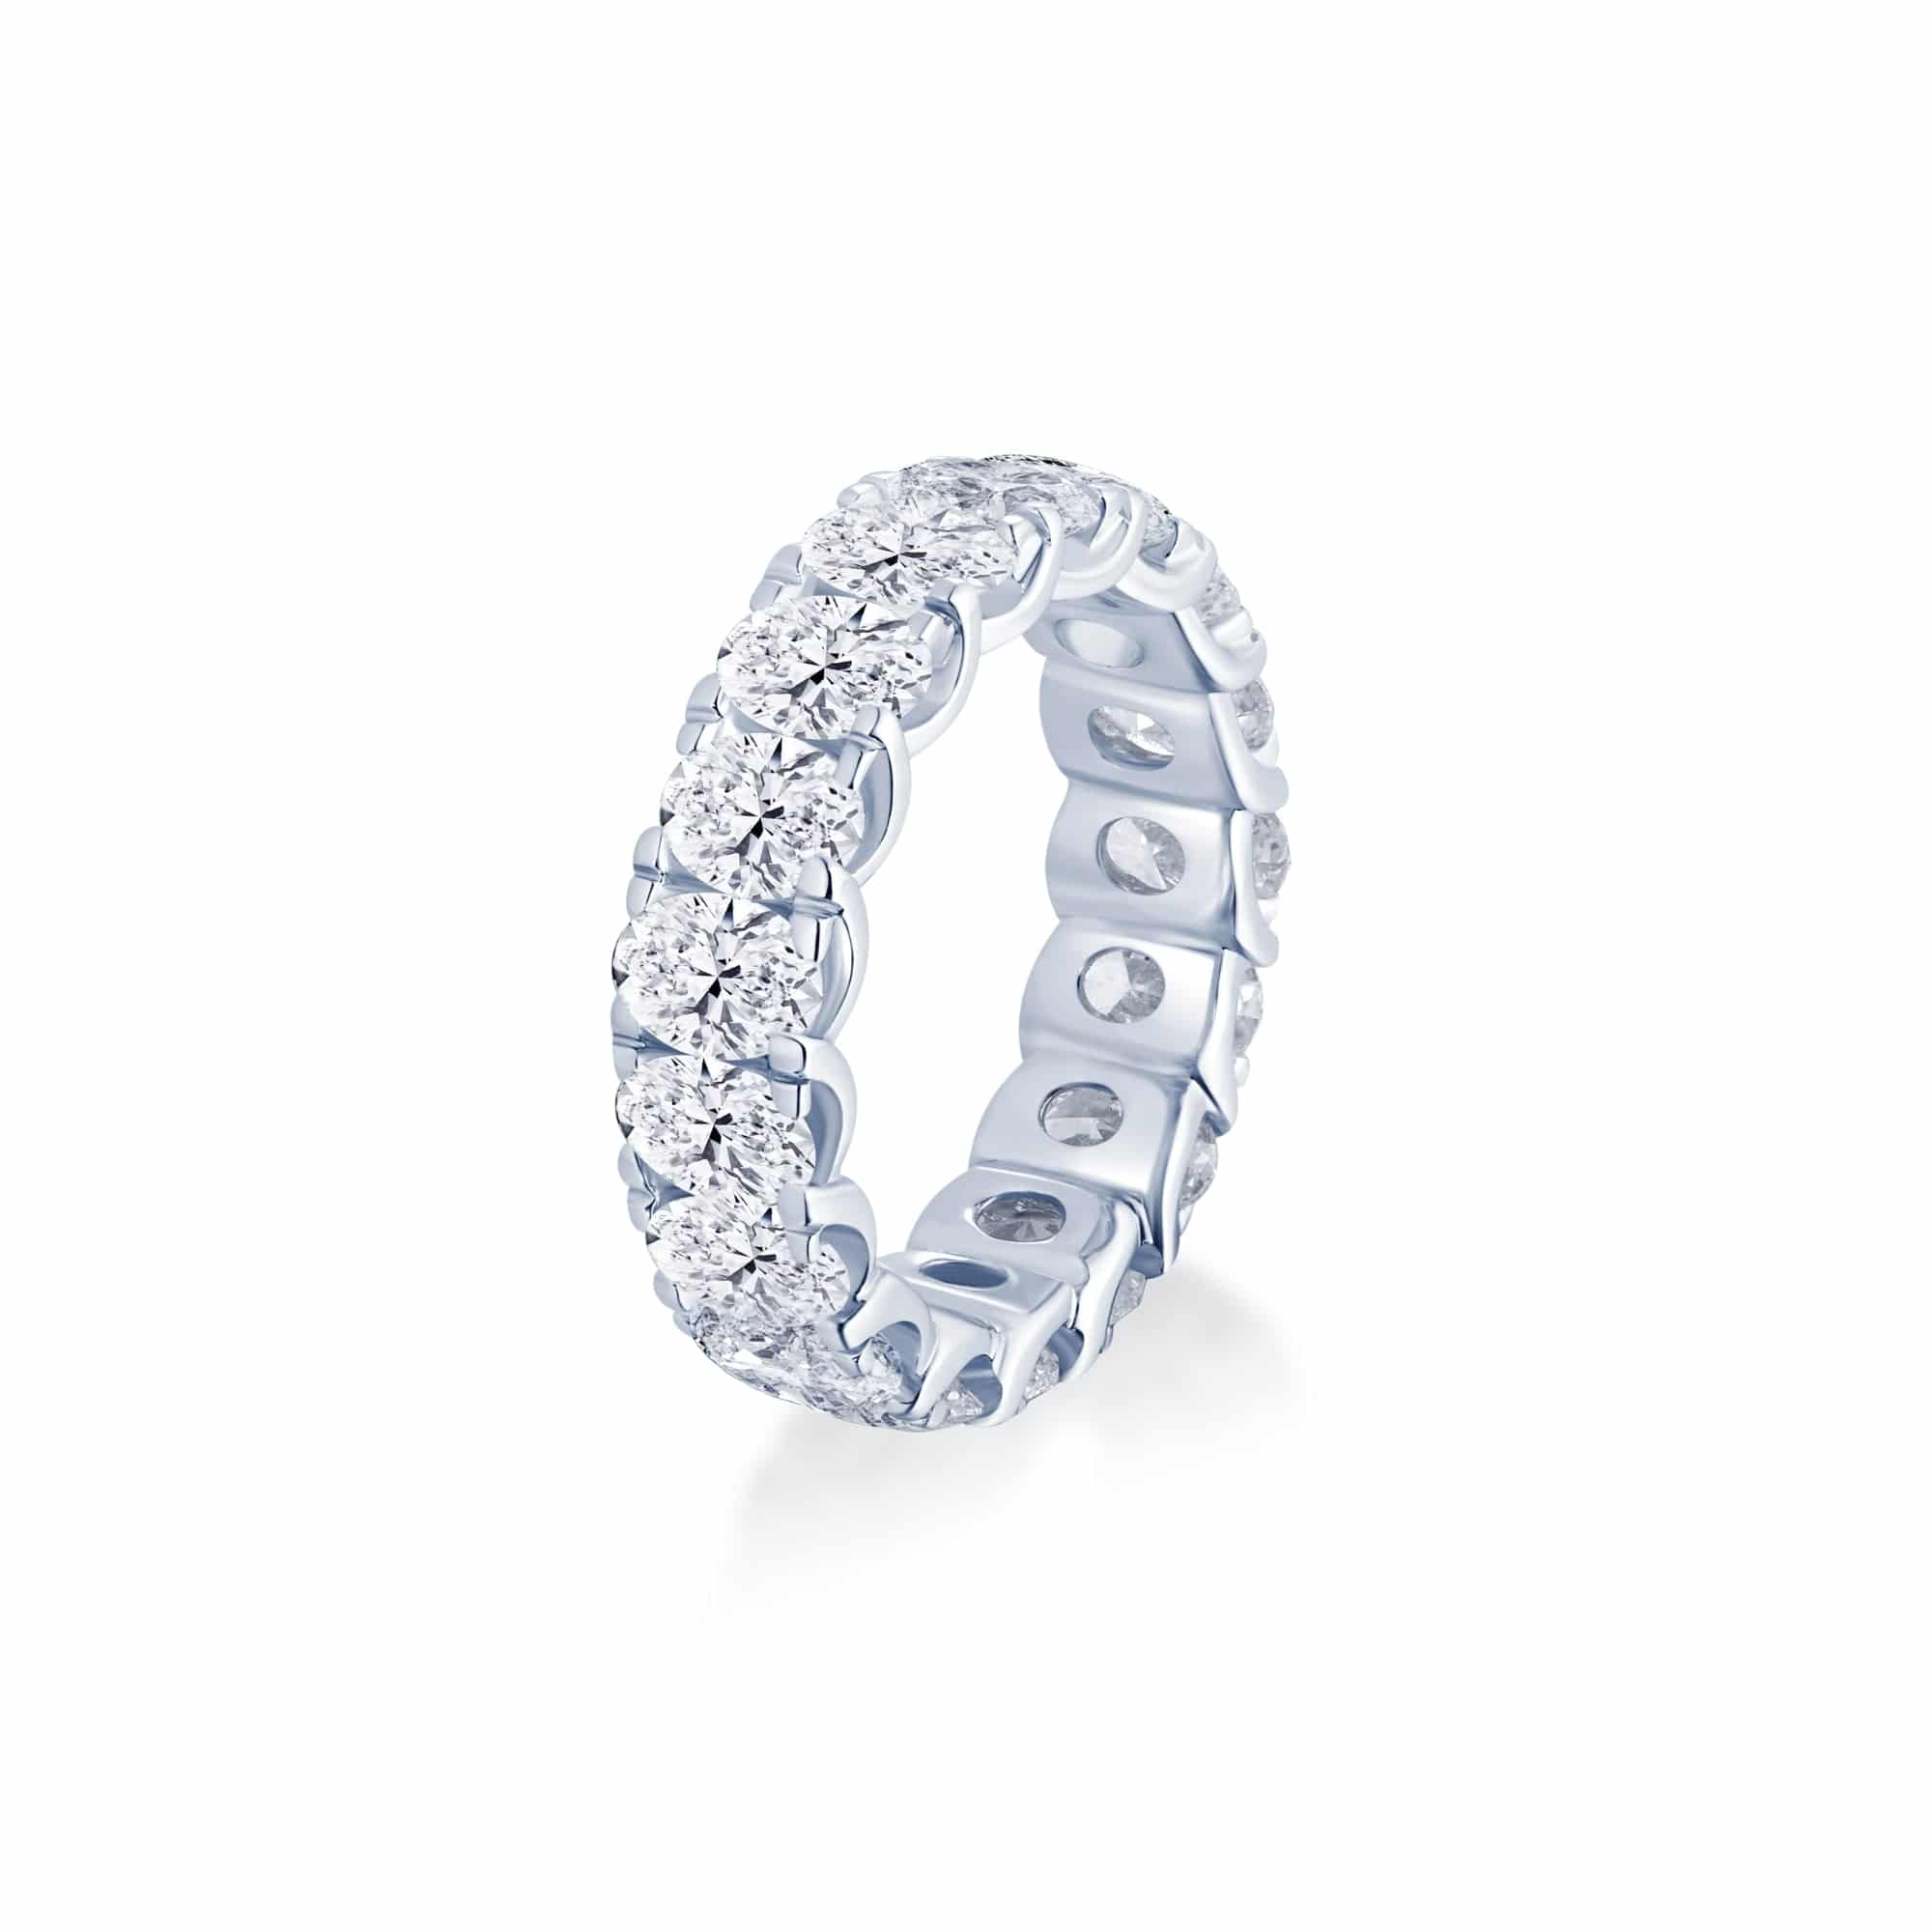 oval-shaped-diamond-eternity-ring-gia-certificate-dro2739-45170989367460.jpg